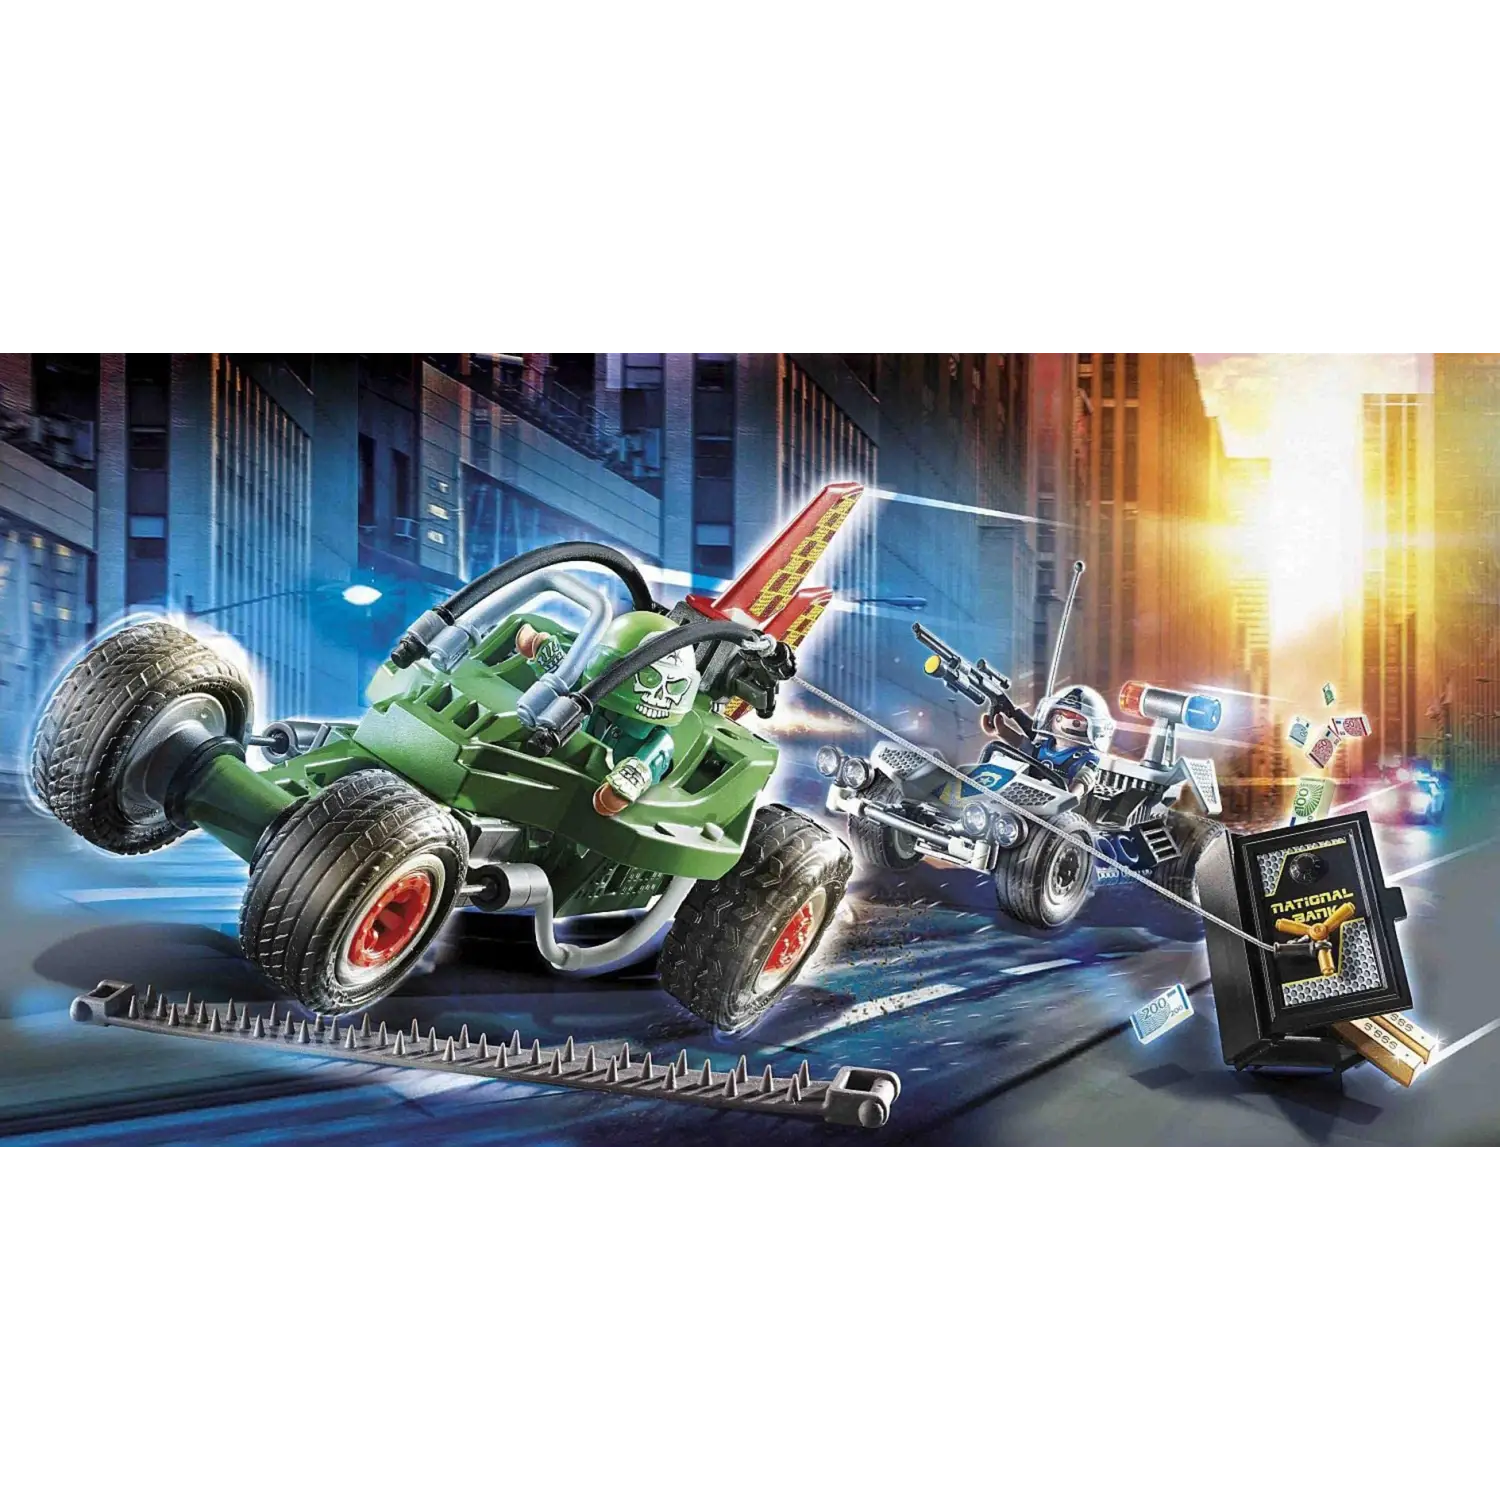 Playmobil City Action - Police Go-Kart Escape 70577 (for Kids 4